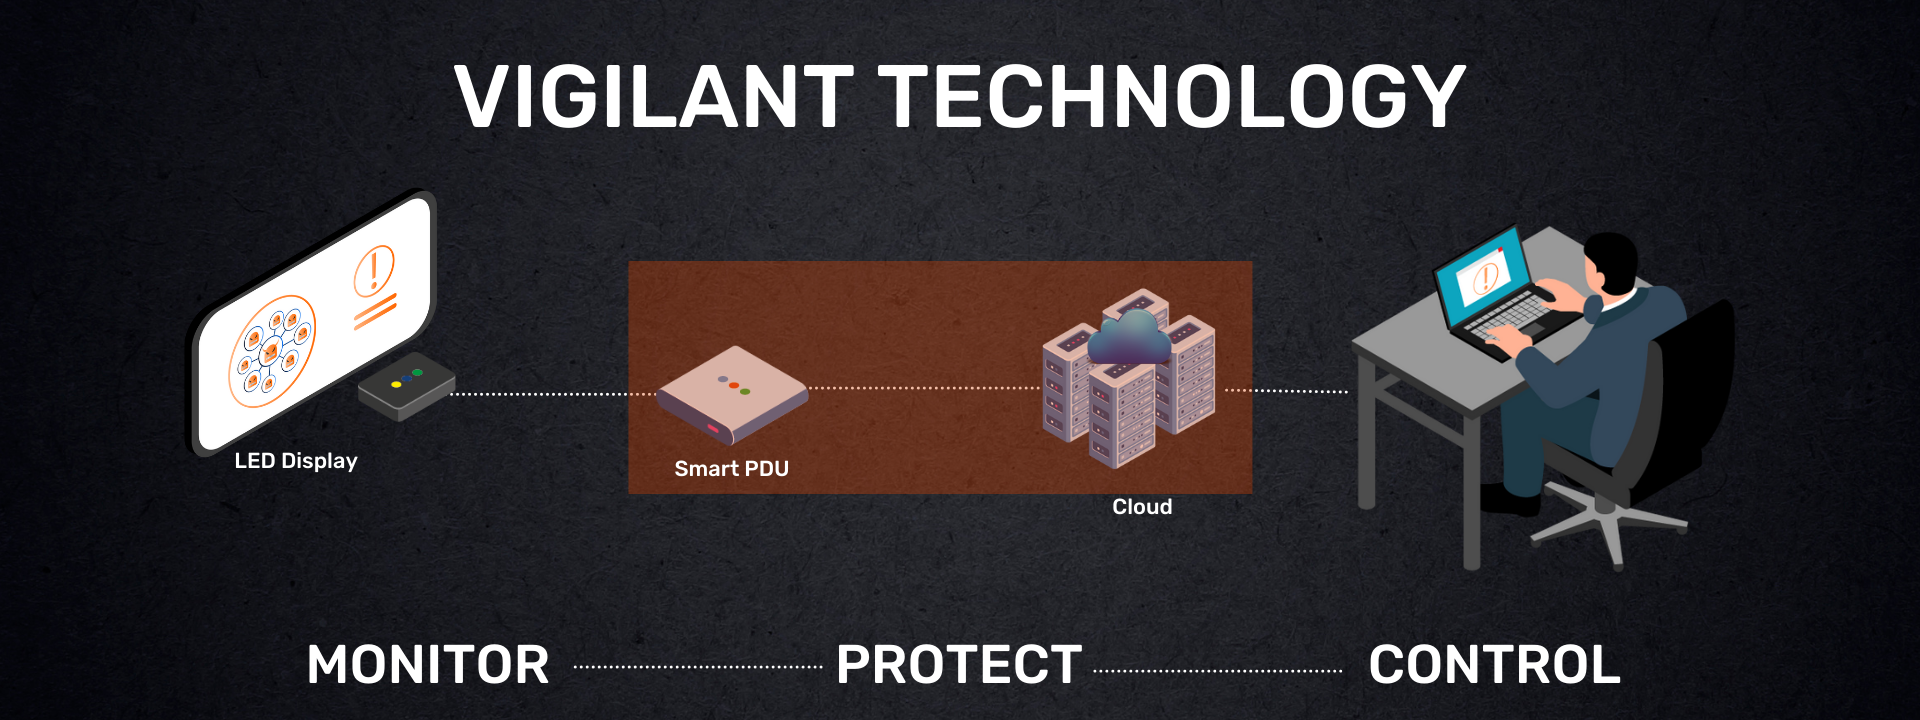 Vigilant Technology